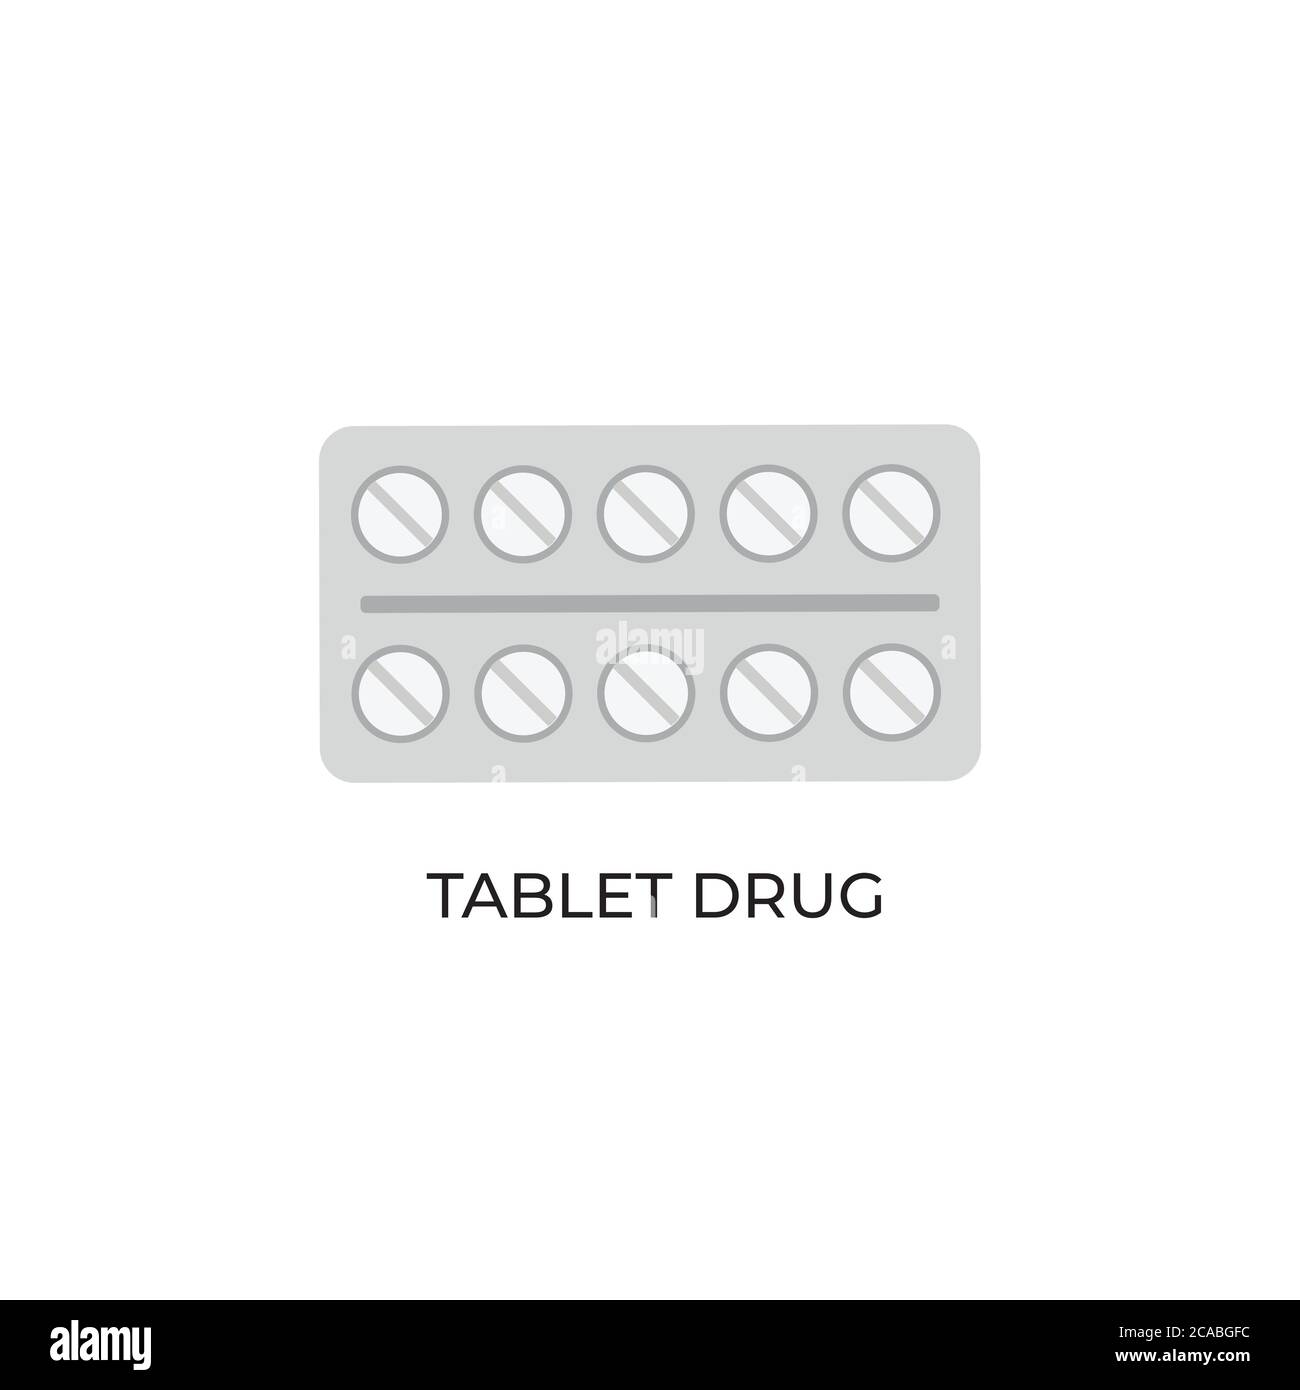 Drug vector icon, Flat design illustration of  tablet  package, Medical pharmacy packaging for drugs, antibiotics, vitamins or aspirin tablets. Stock Vector